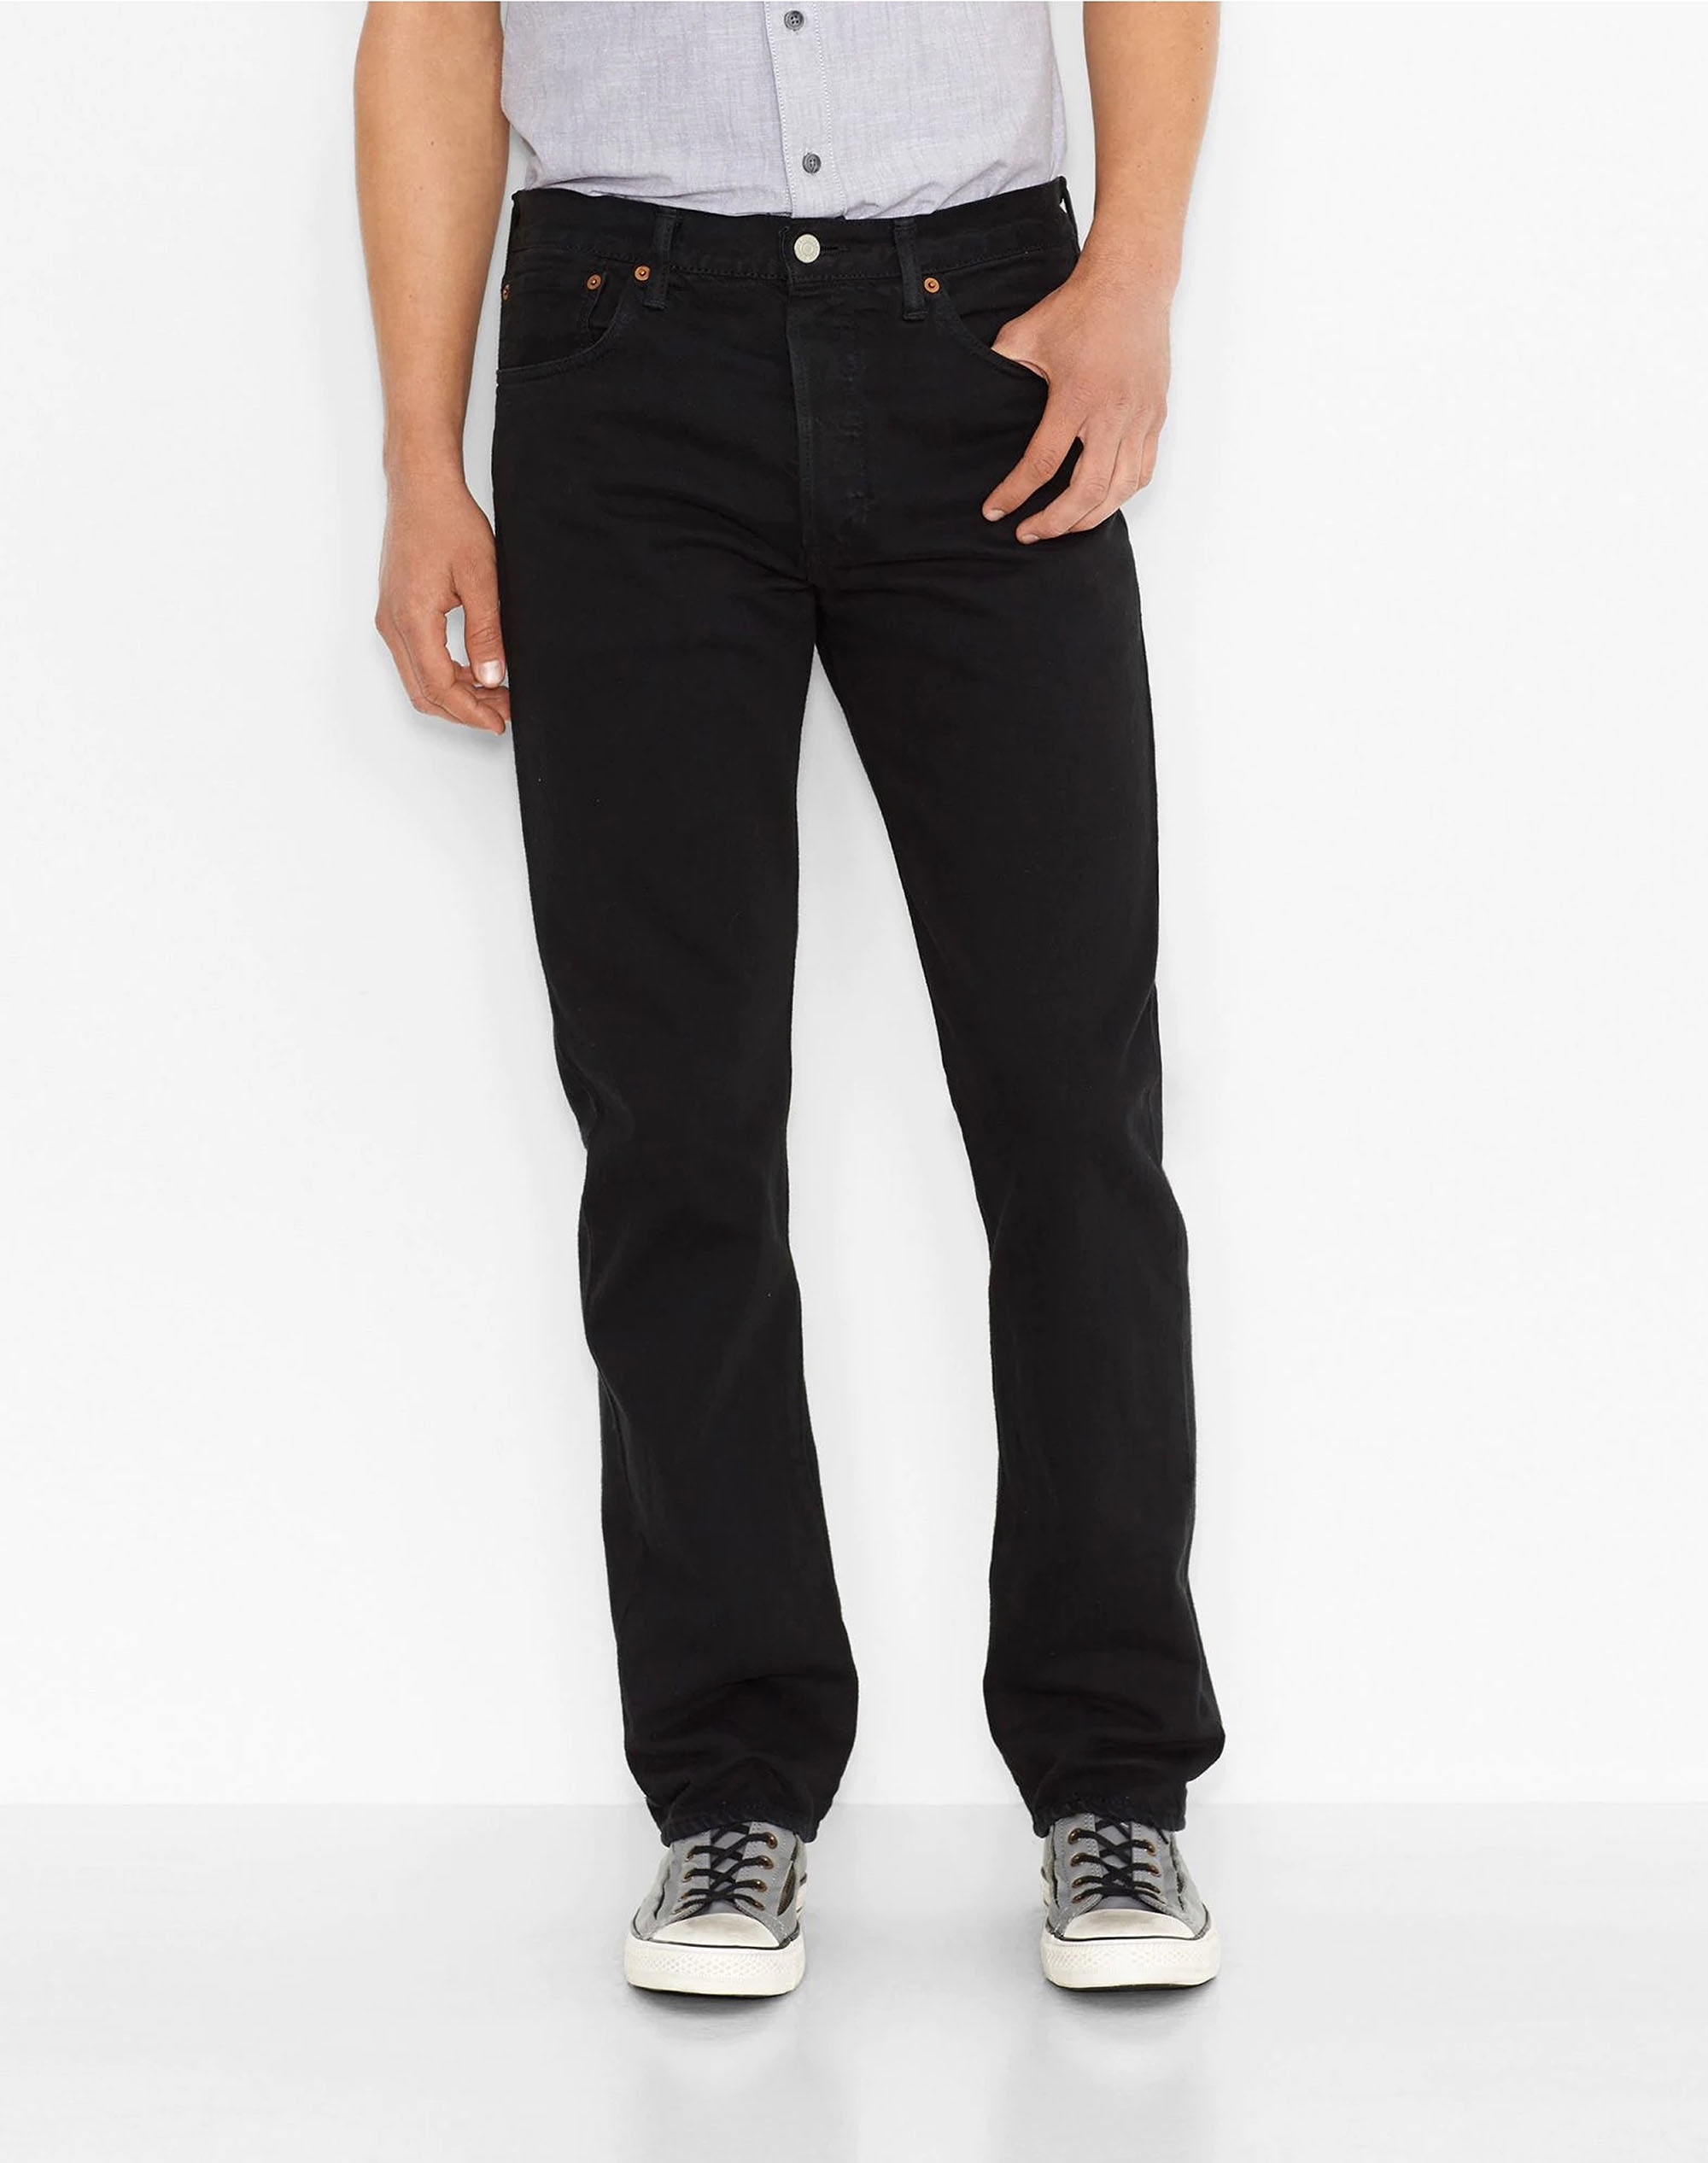 Levi's 501 regular pantalons texans d'home 00501-0165 negre